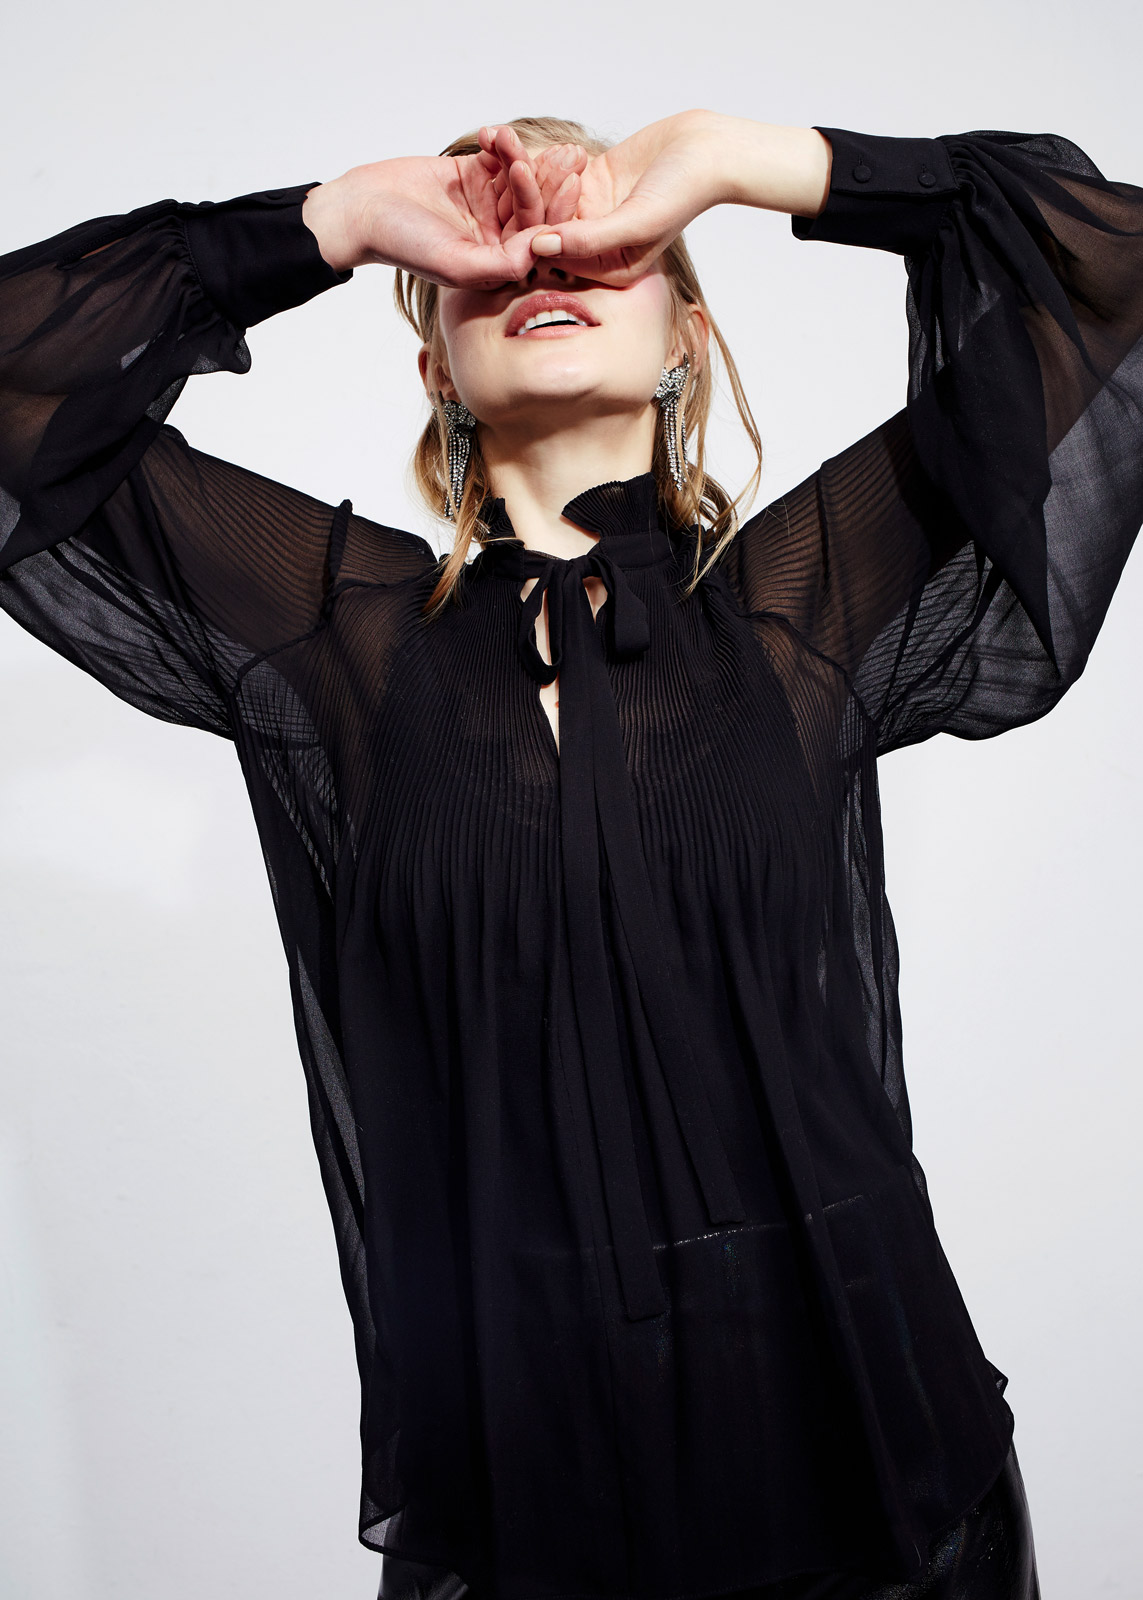 Fashion Campaign for SET with model Aneta Pajak, shot by Modefotograf Johannes Graf